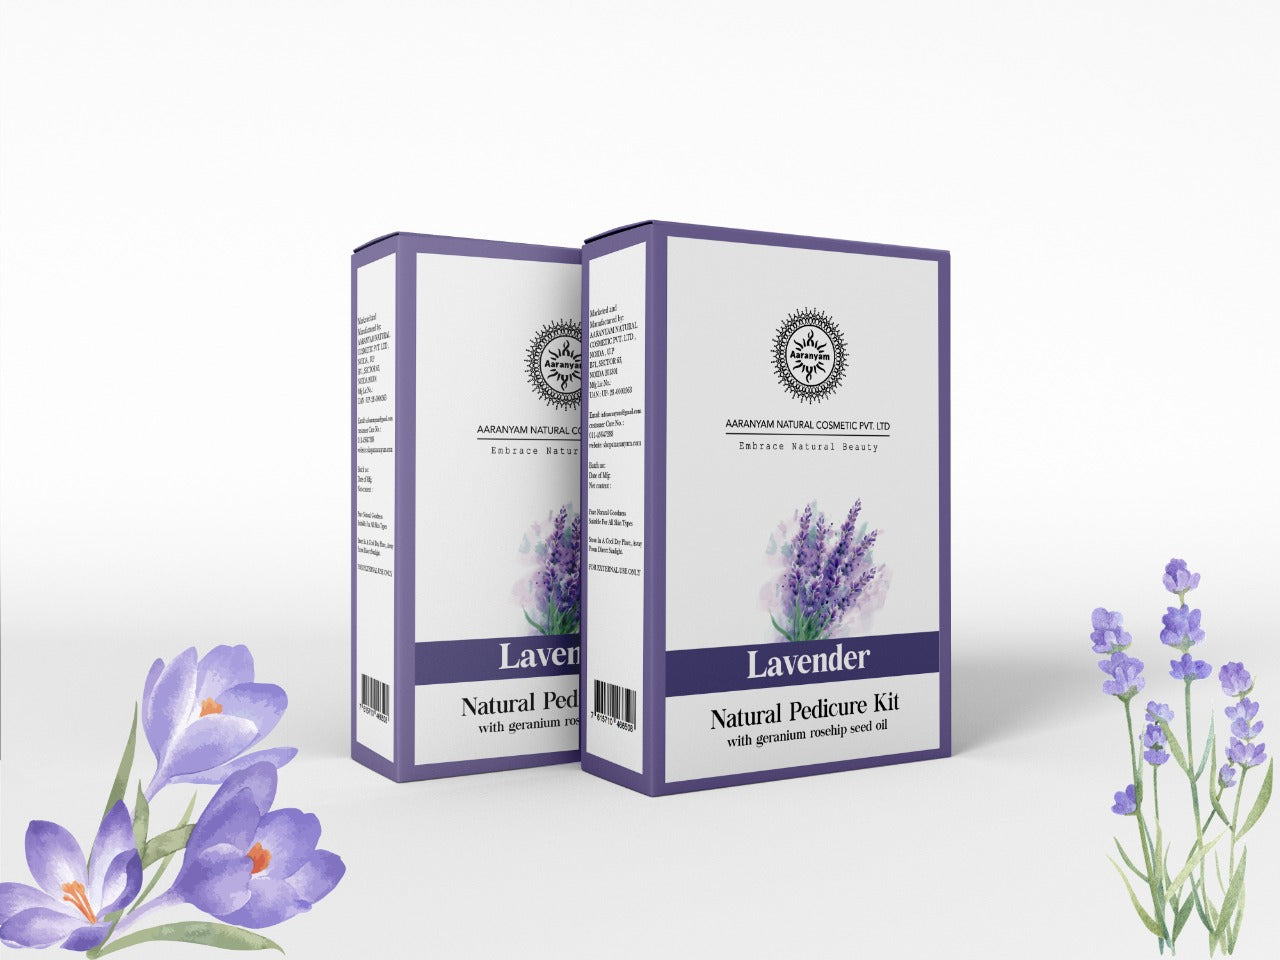 Aaranyam Natural Pedicure Kit with lavender and natural herbs 